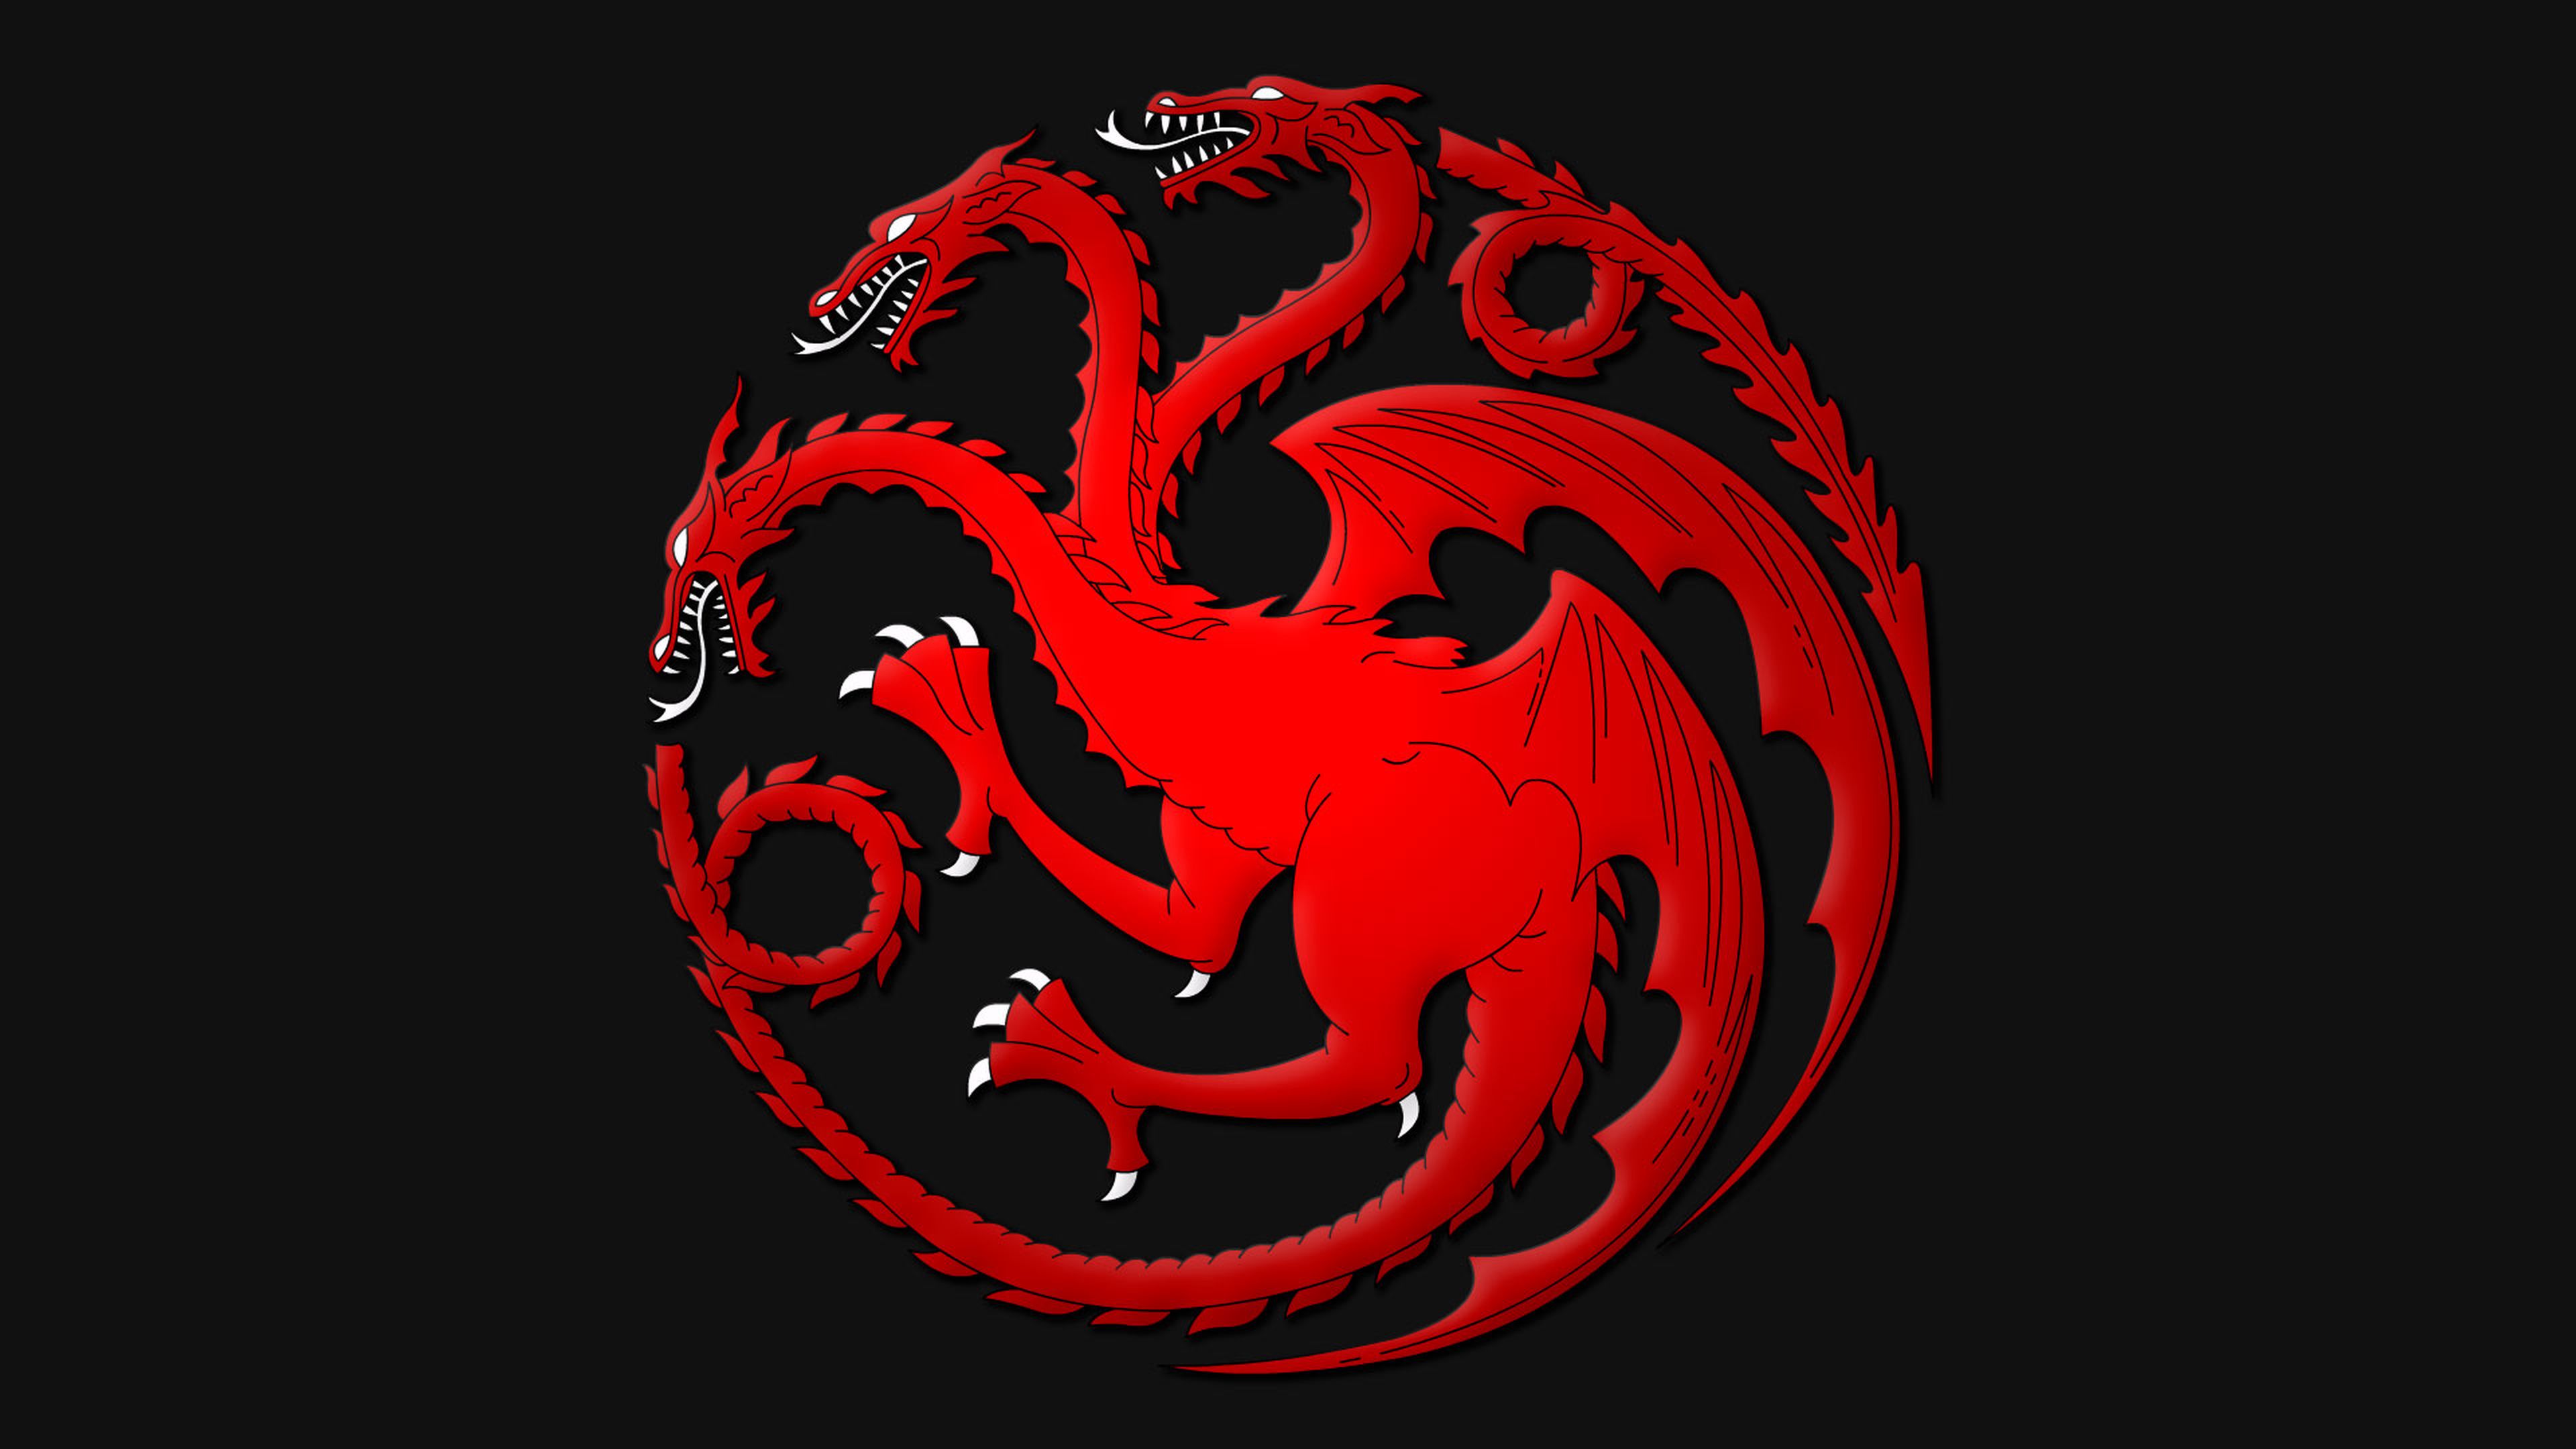 Juego de Tronos - emblema de los Targaryen